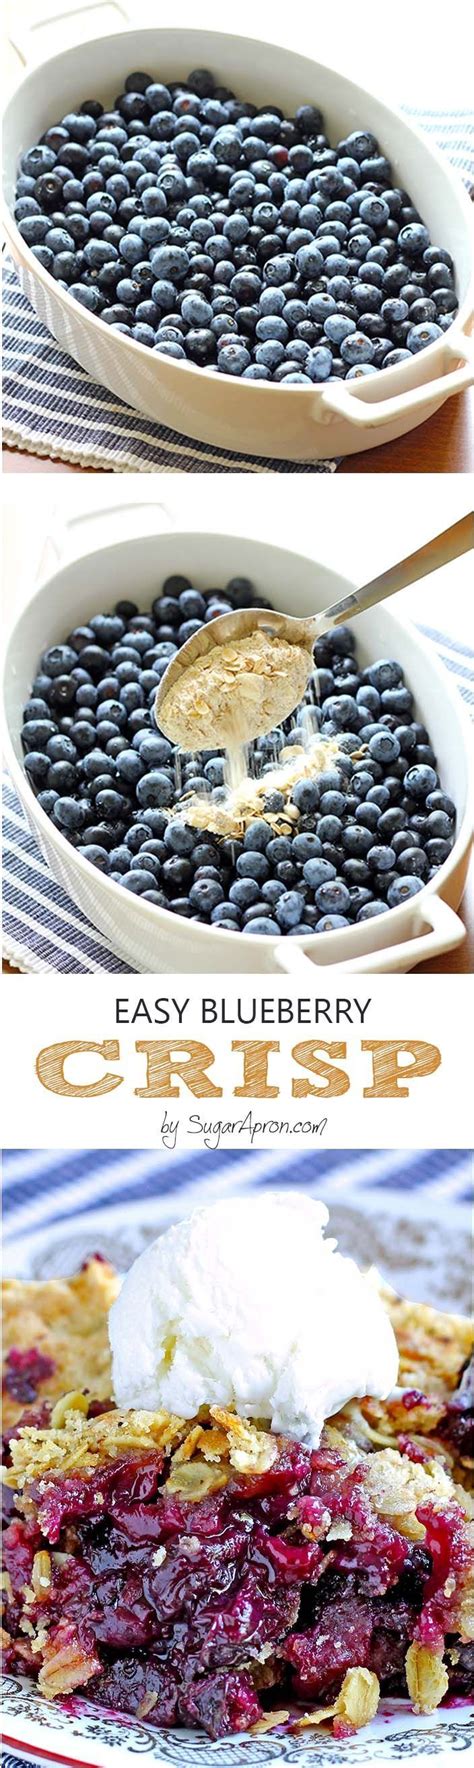 Easy Blueberry Crisp Recipe Dessert Recipes Blueberry